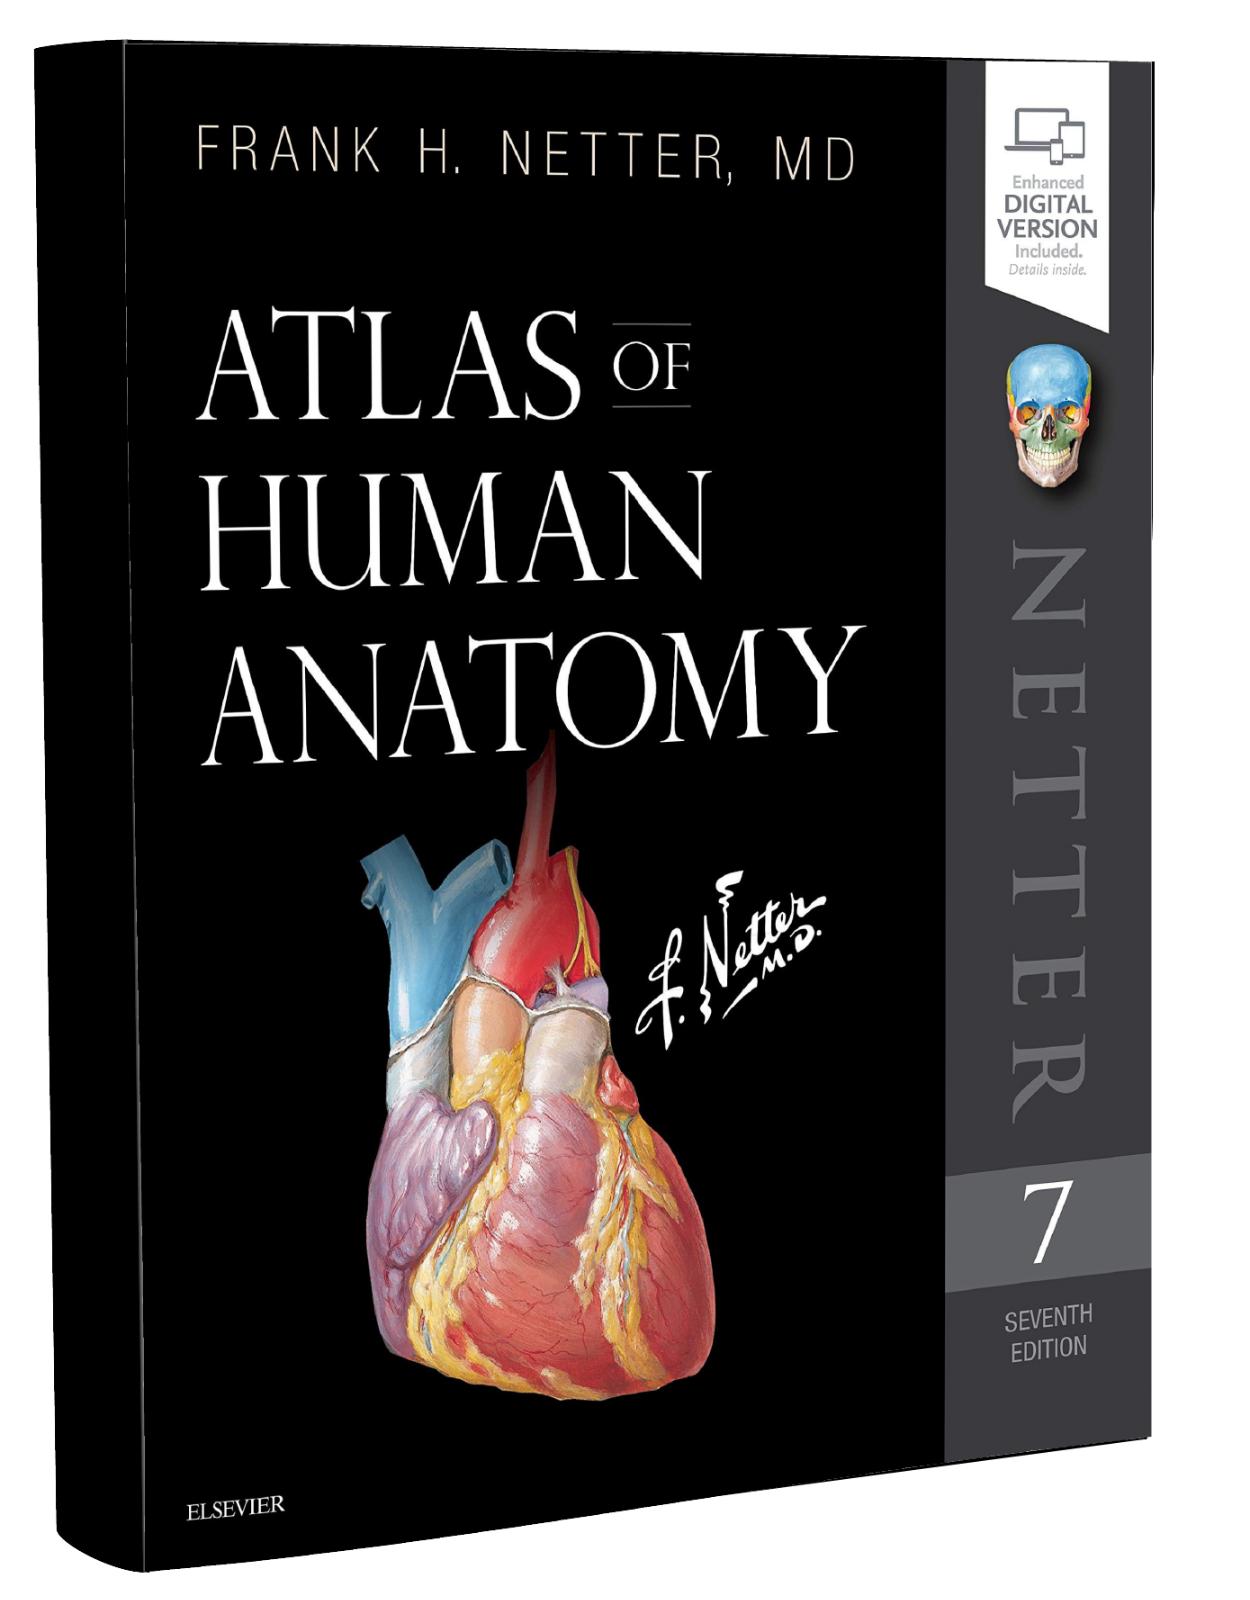 Netter Atlas of Human Anatomy, 7th Edition